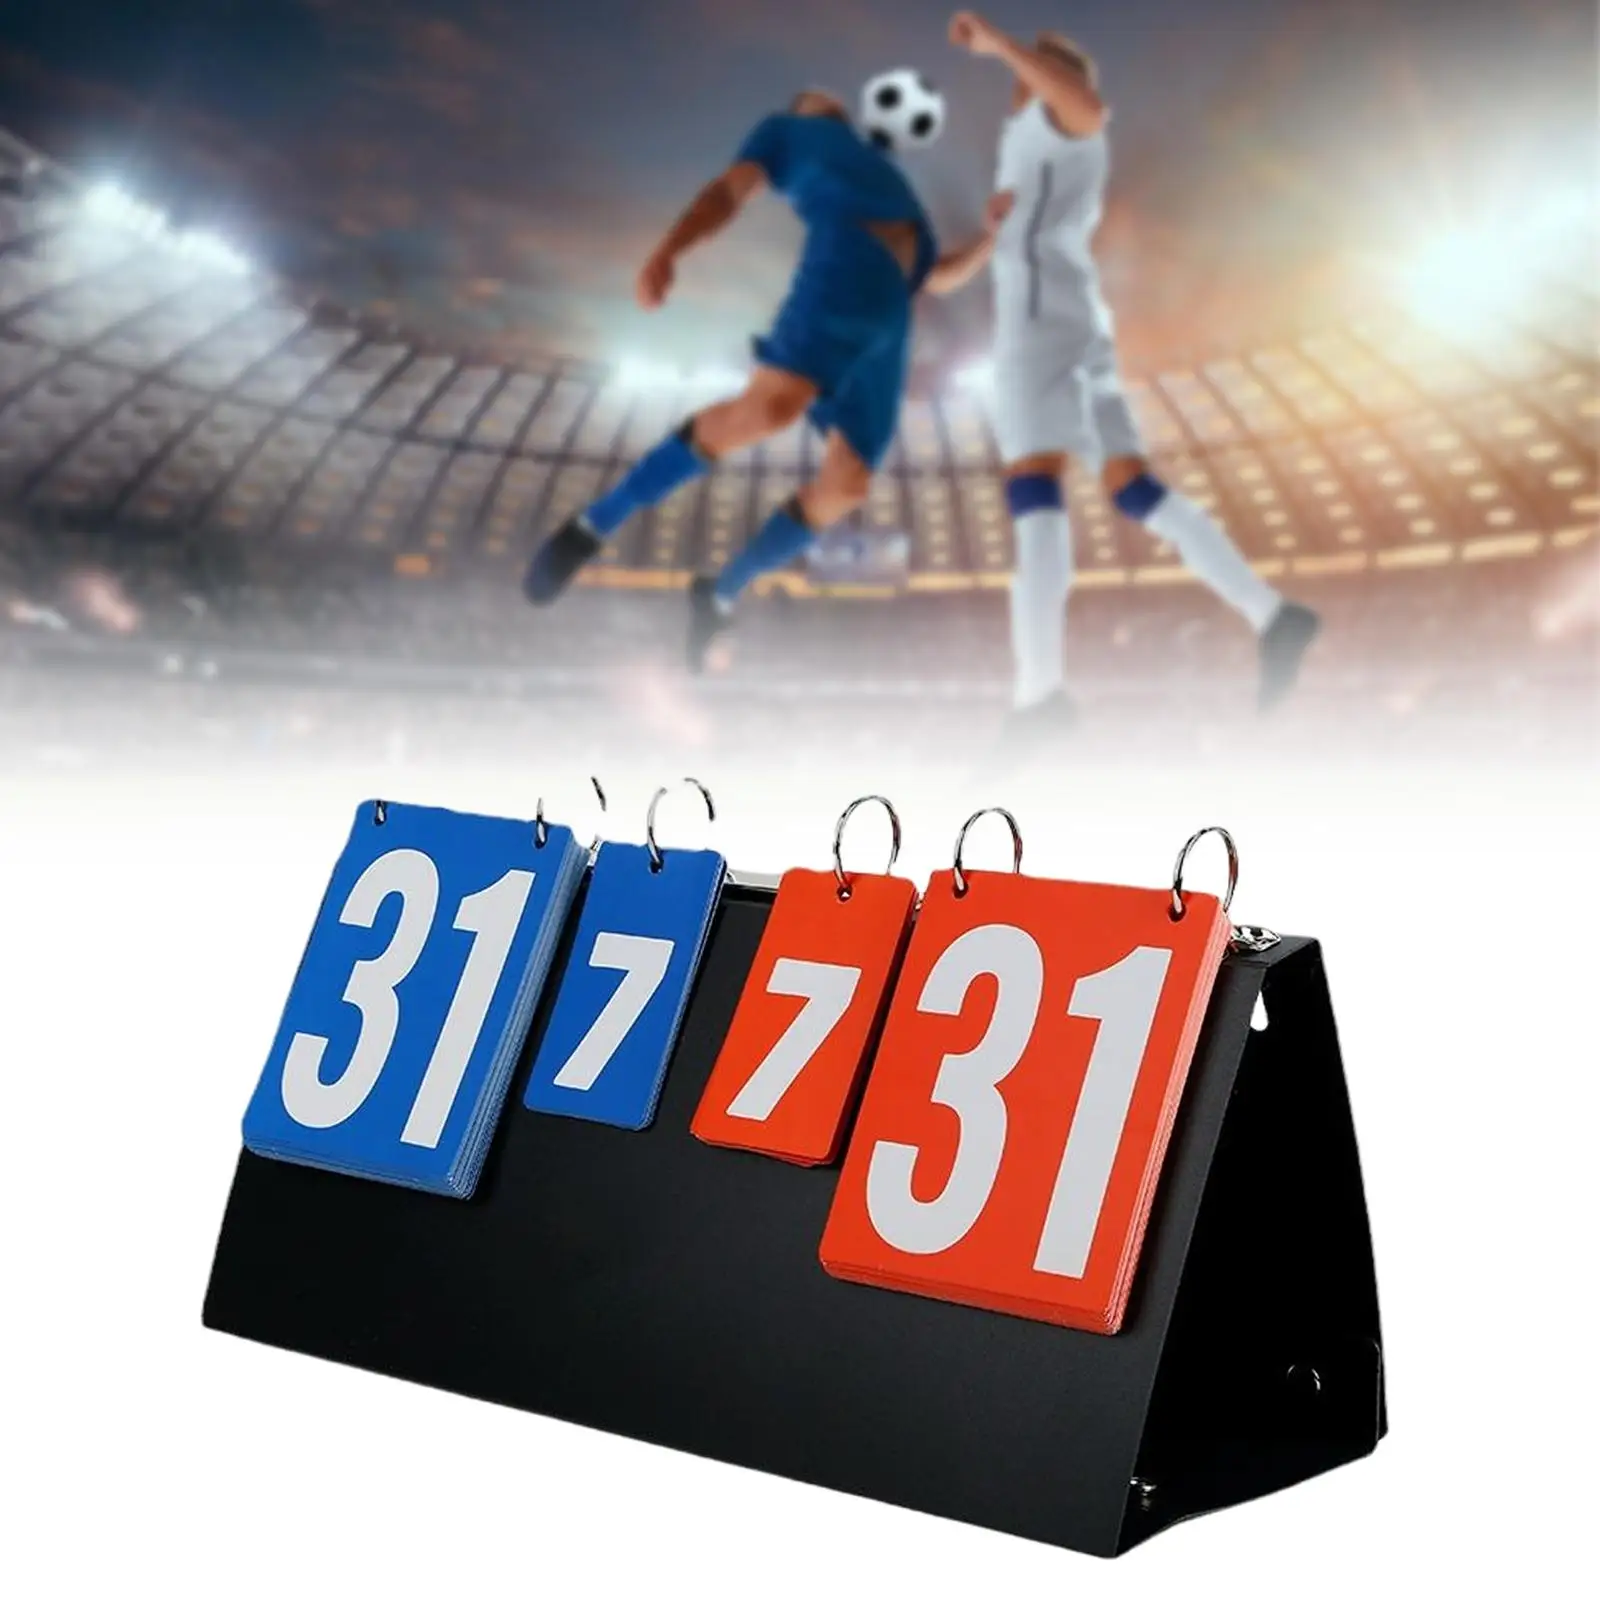 4 Digits Portable Table Top Scoreboard, Score Keeper for Basketball Football Tennis Baseball Soccer Volleyball